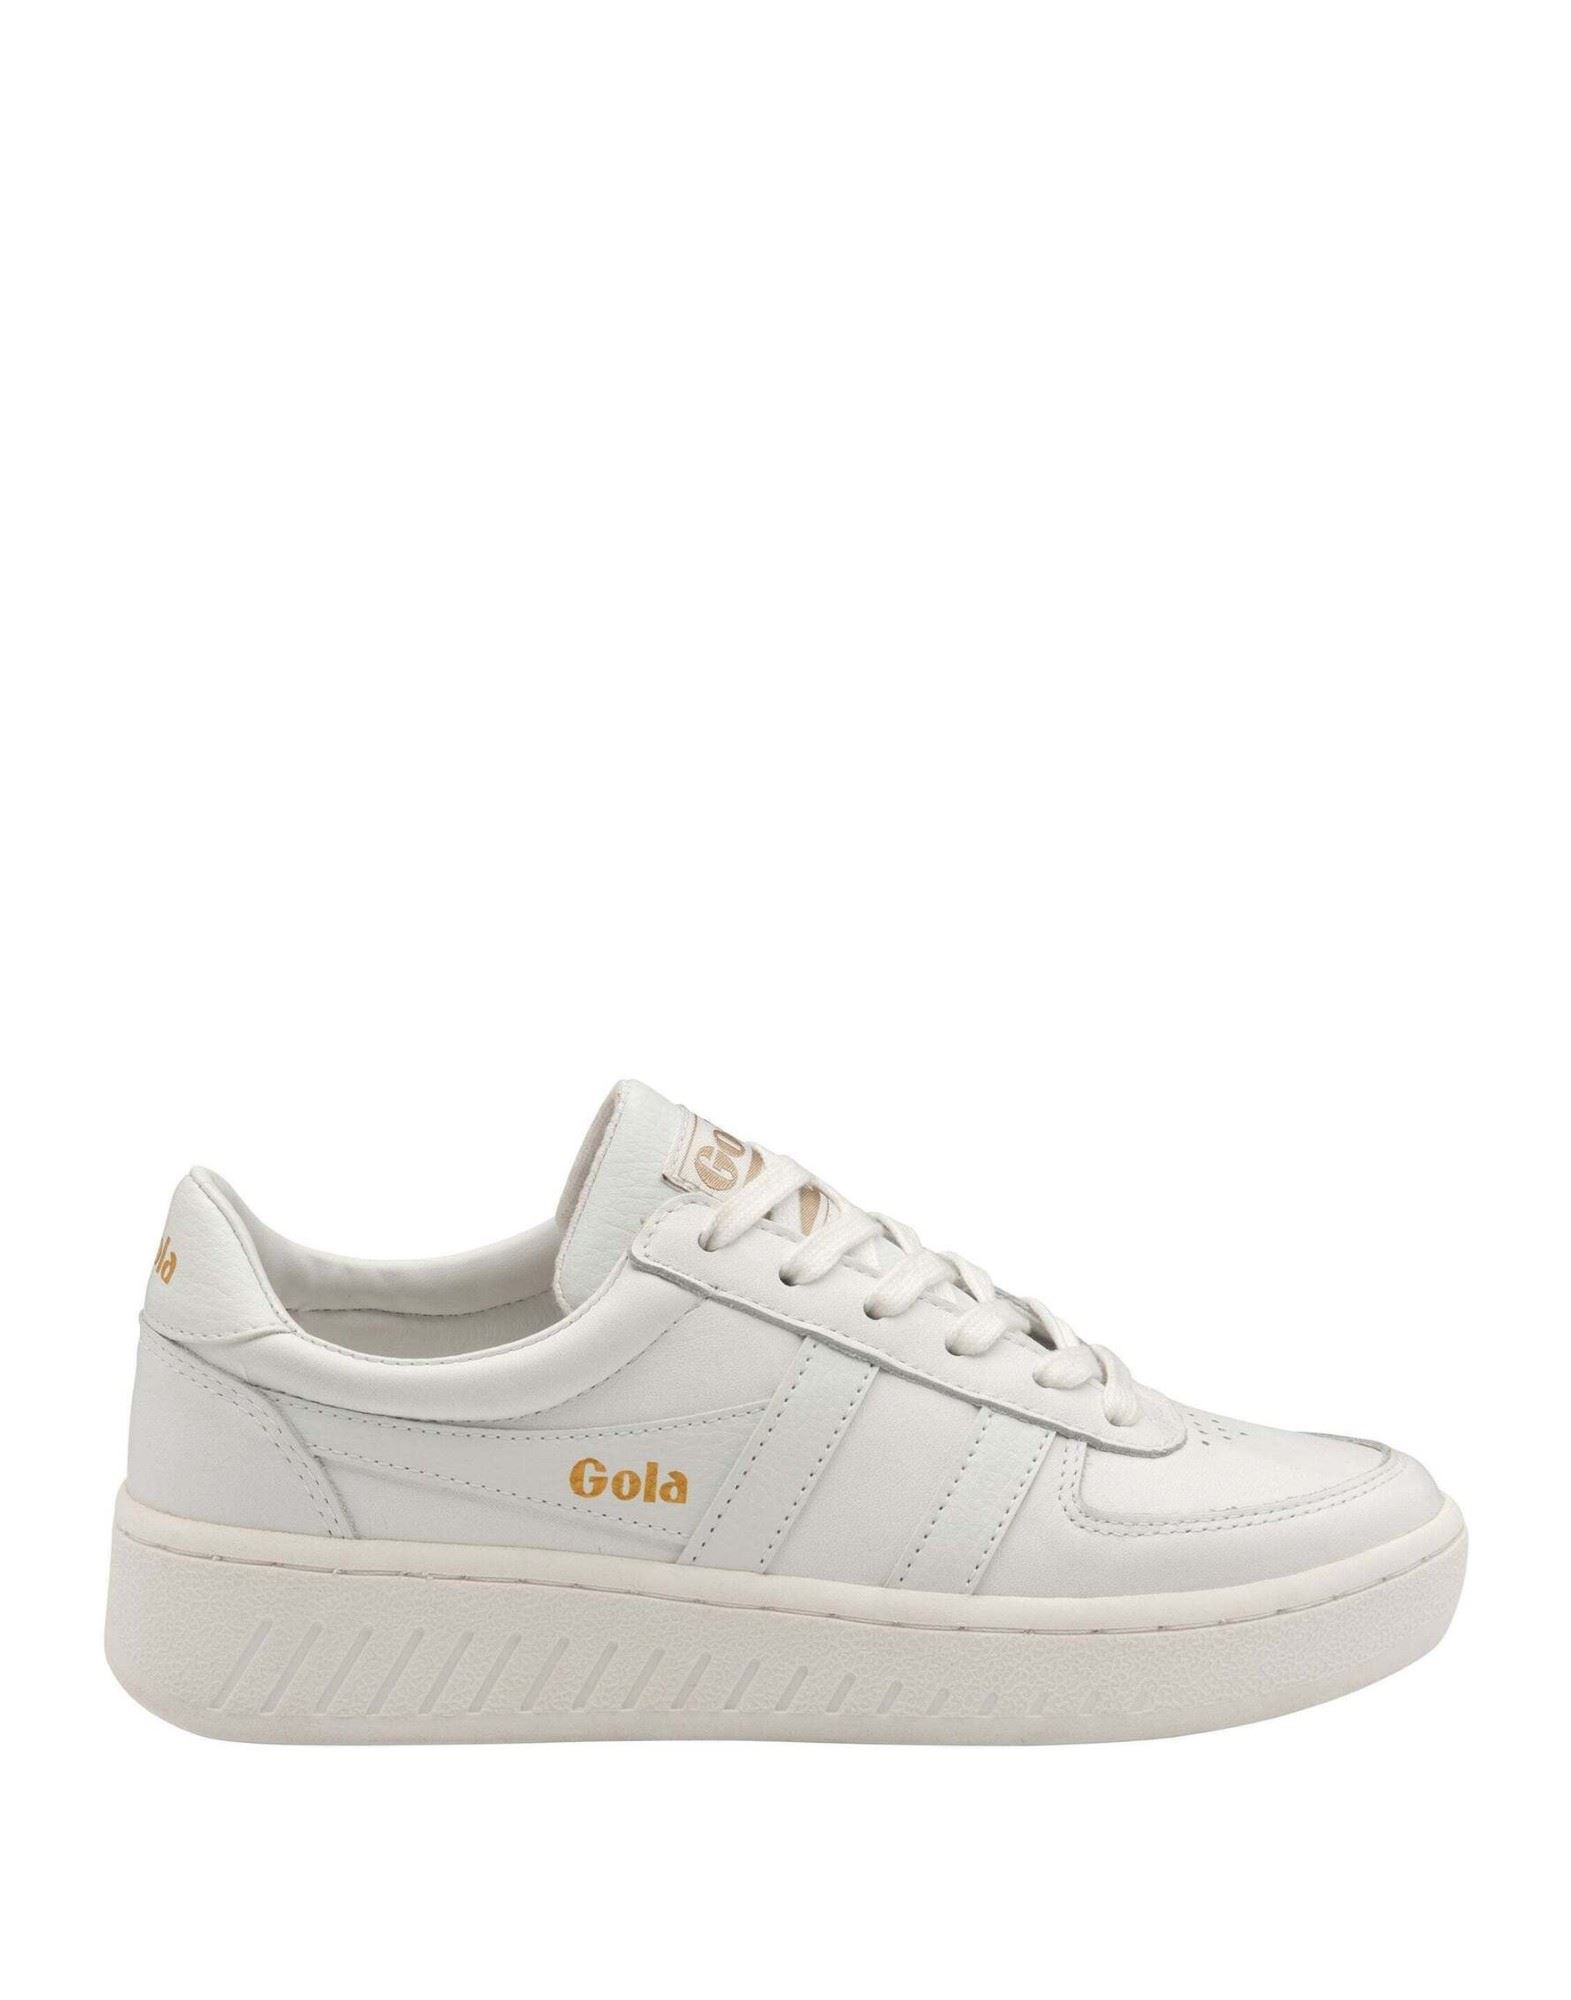 GOLA Sneakers Damen Weiß von GOLA